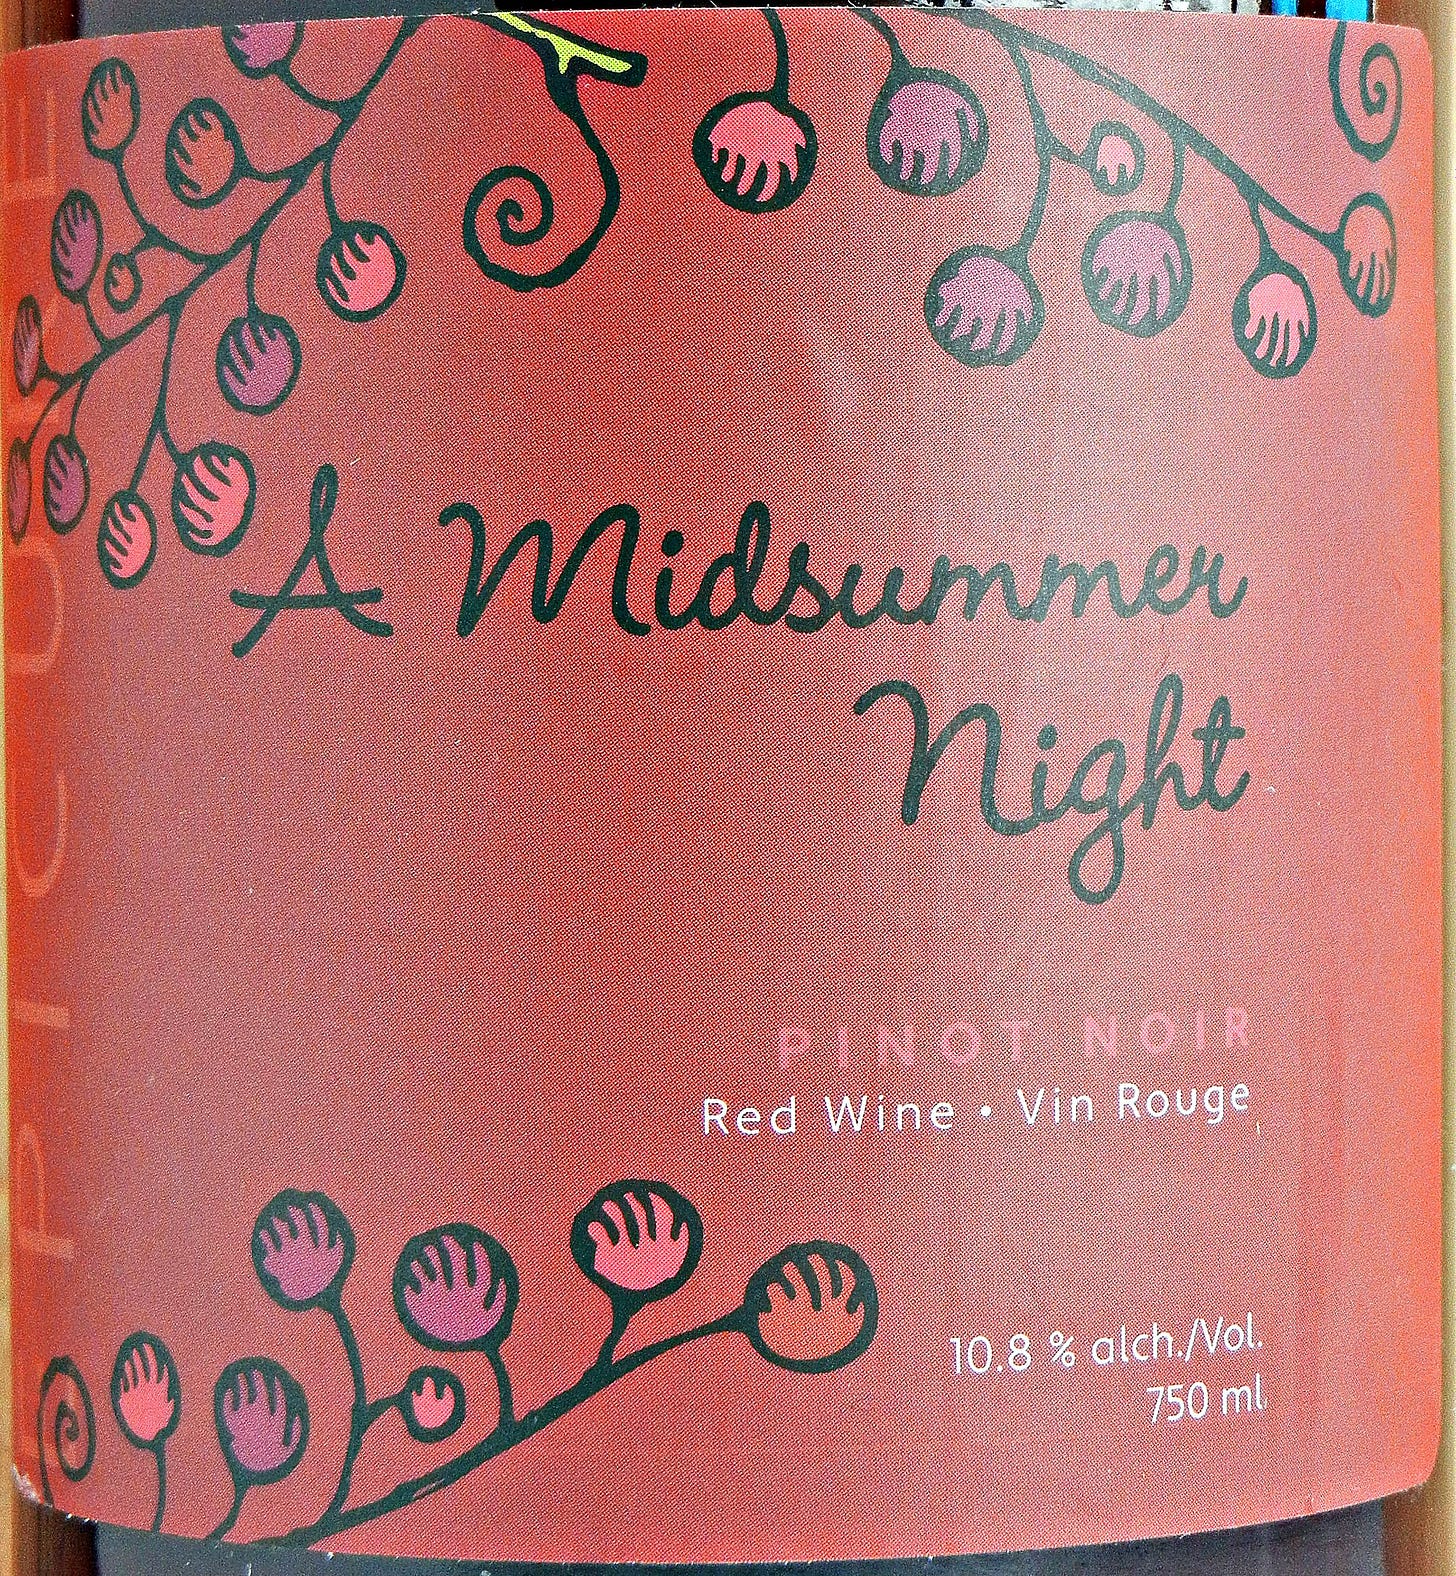 Domaine Rochette A Midsummer Night Pinot Noir 2009 Label - BC Pinot Noir Tasting Review 26